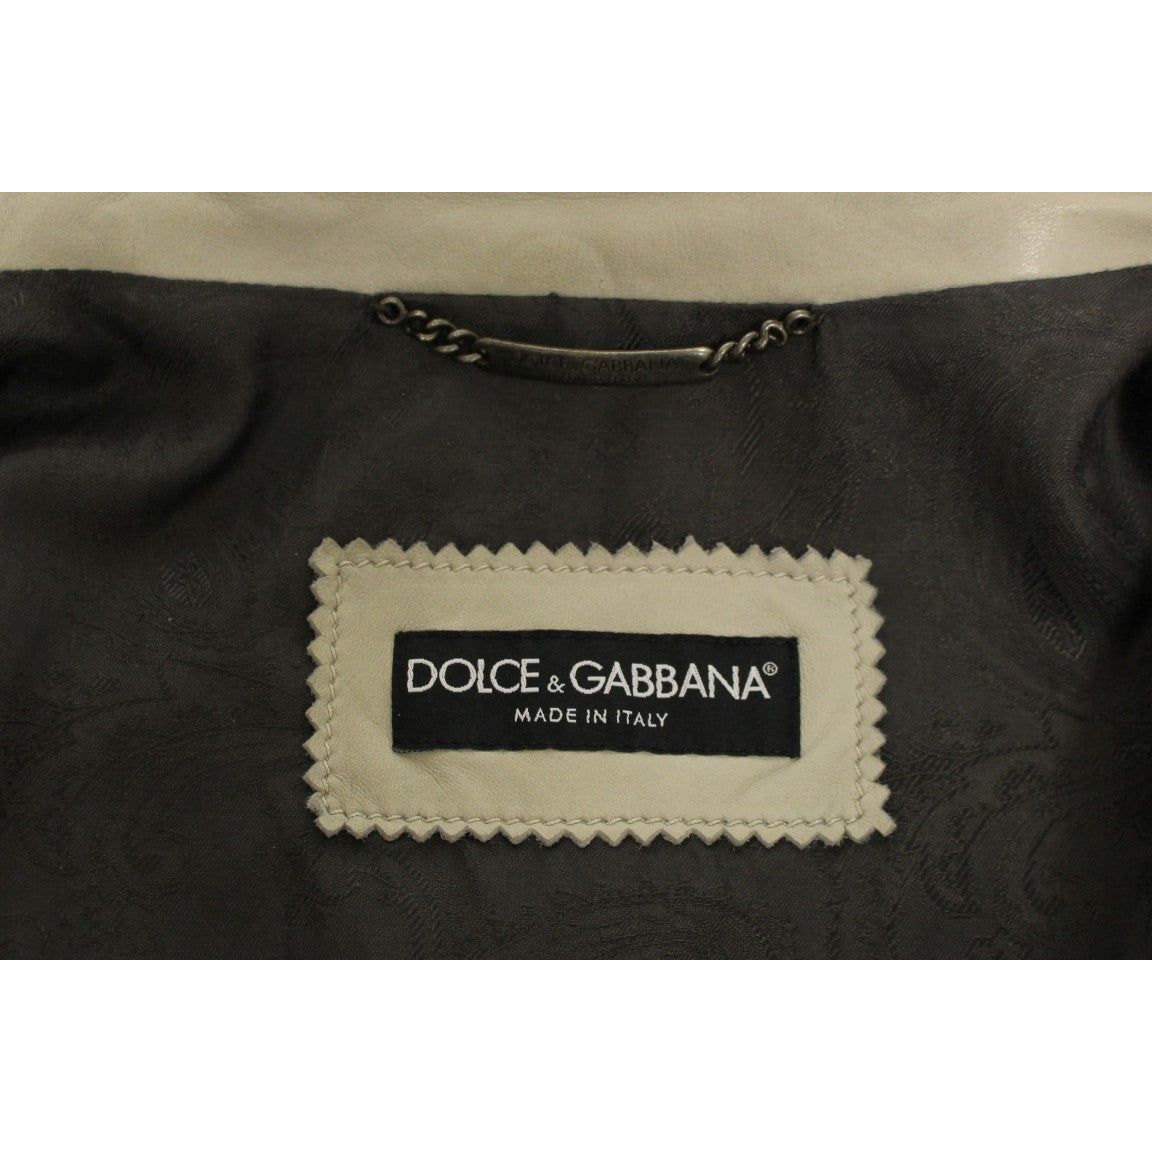 Dolce & Gabbana Elegant Beige Leather Lambskin Jacket Coats & Jackets beige-leather-jacket-biker-coat 54846-beige-leather-jacket-biker-coat-2-6.jpg